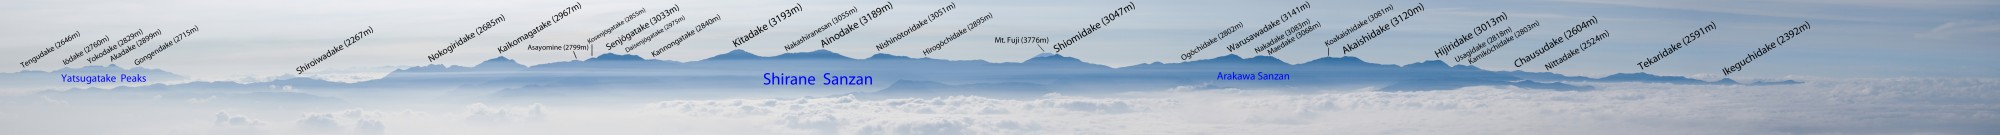 Mts.Akaishi from Mt.Utsugidake 01 en